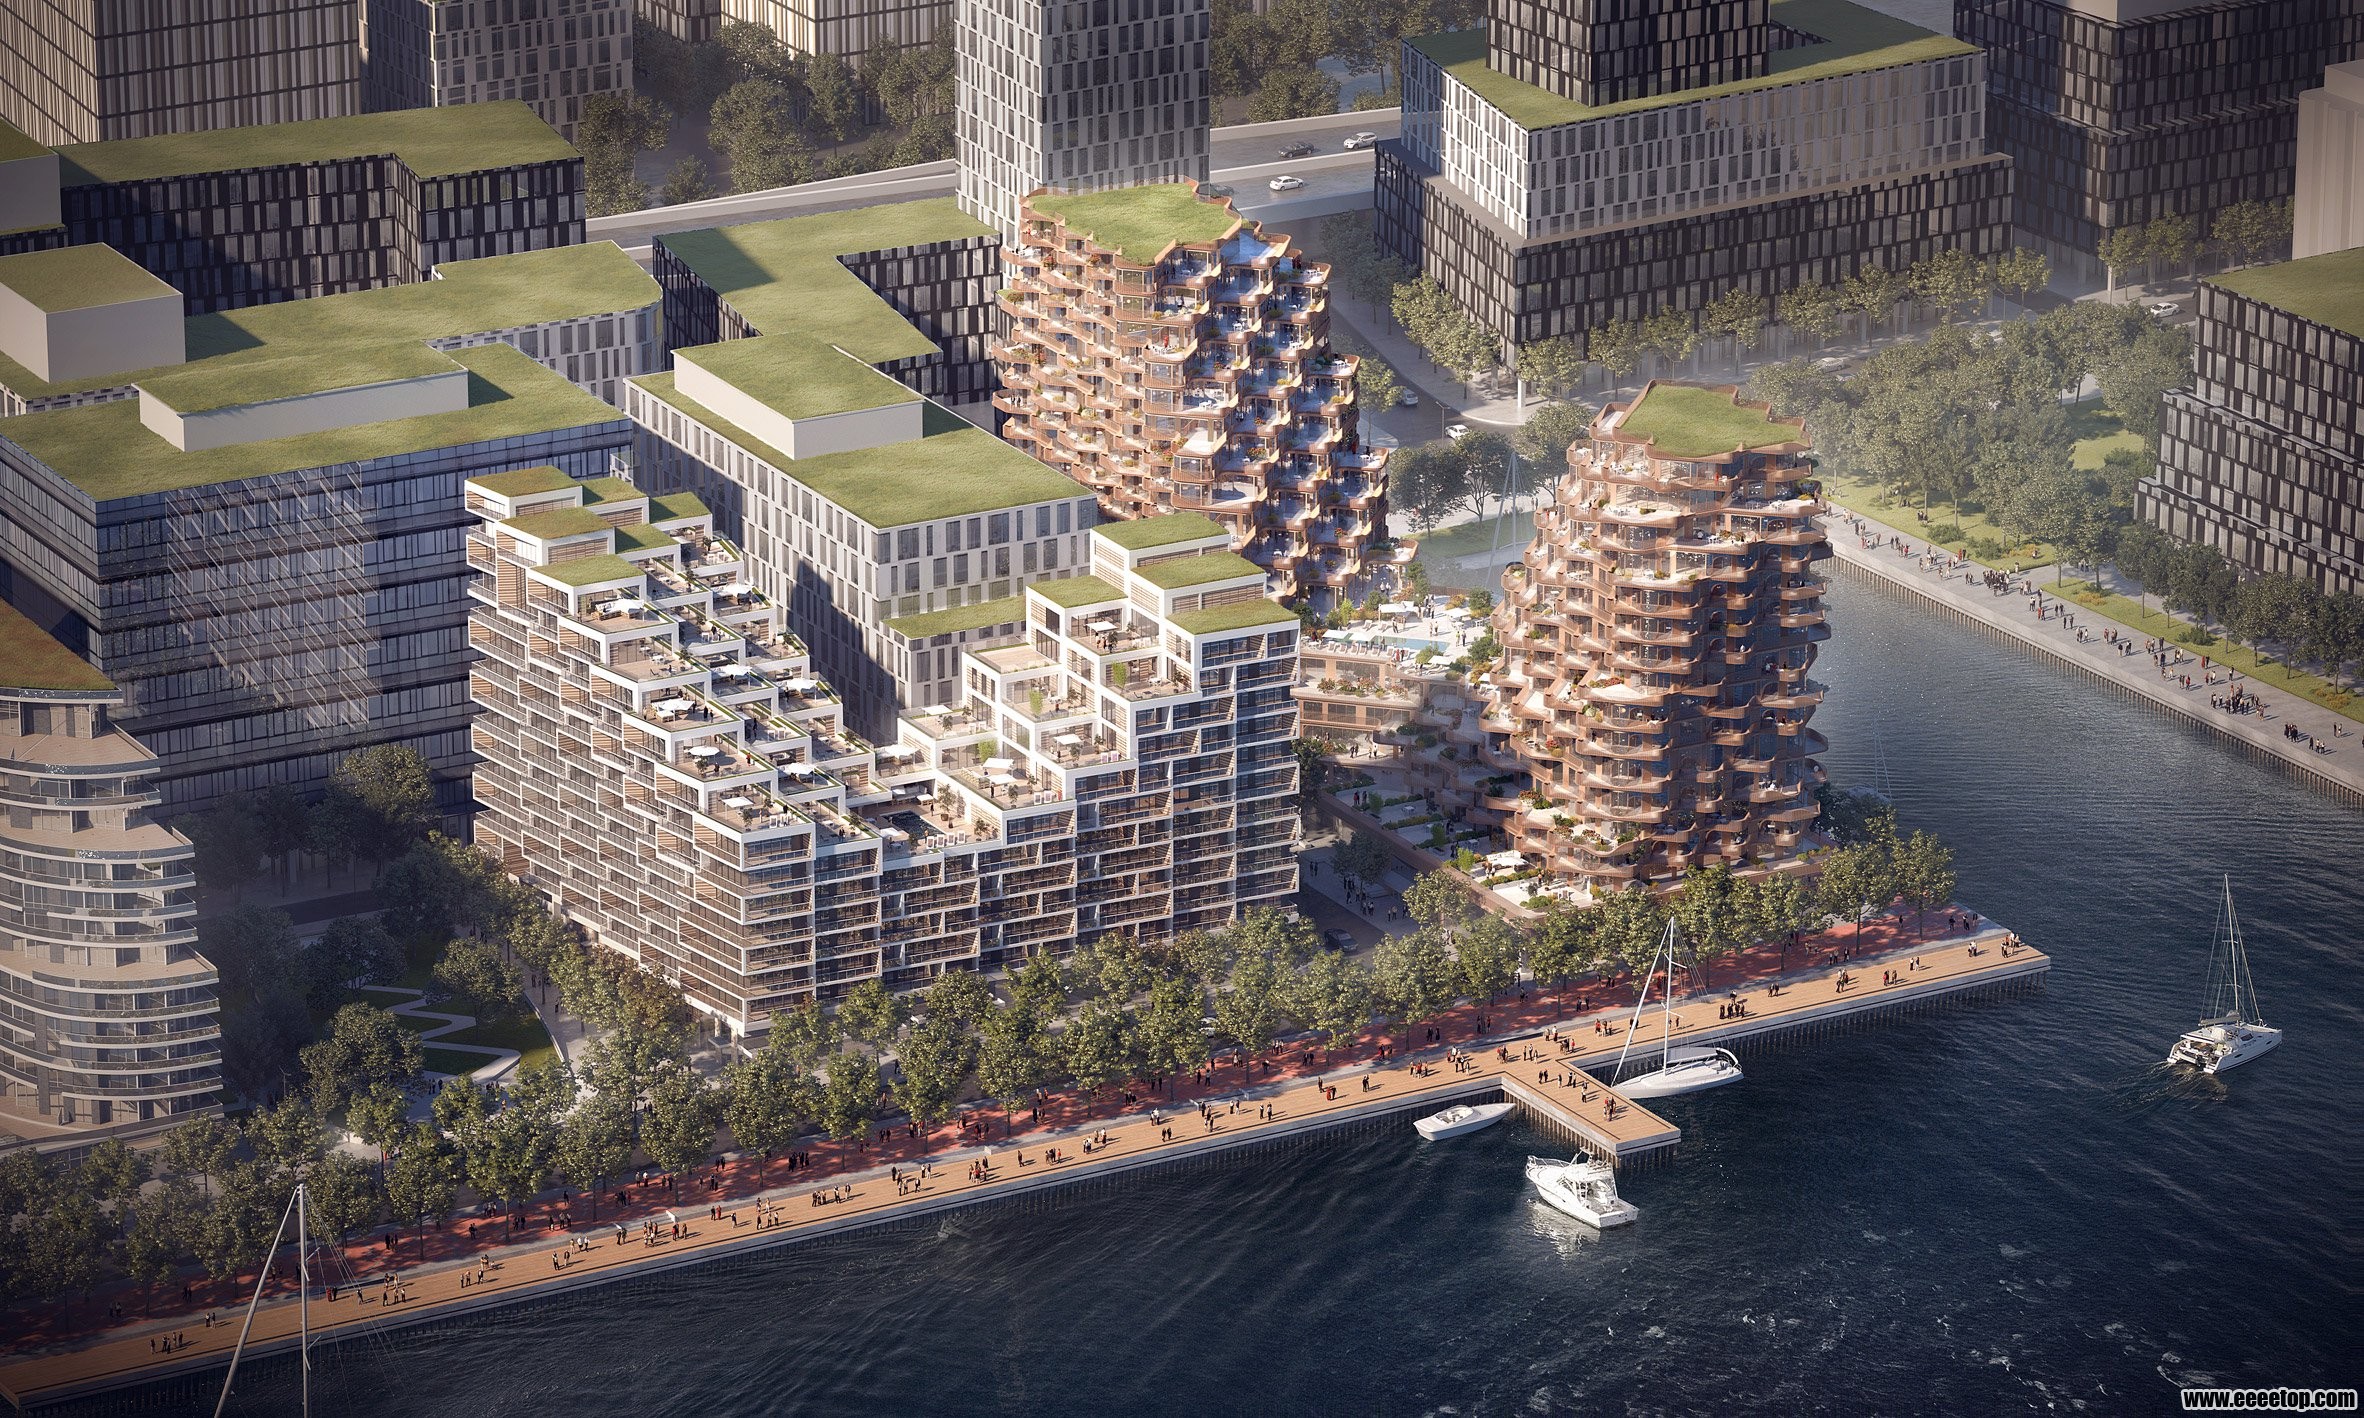 3XN最近赢得了多伦多湖滨集合住宅的设计竞赛